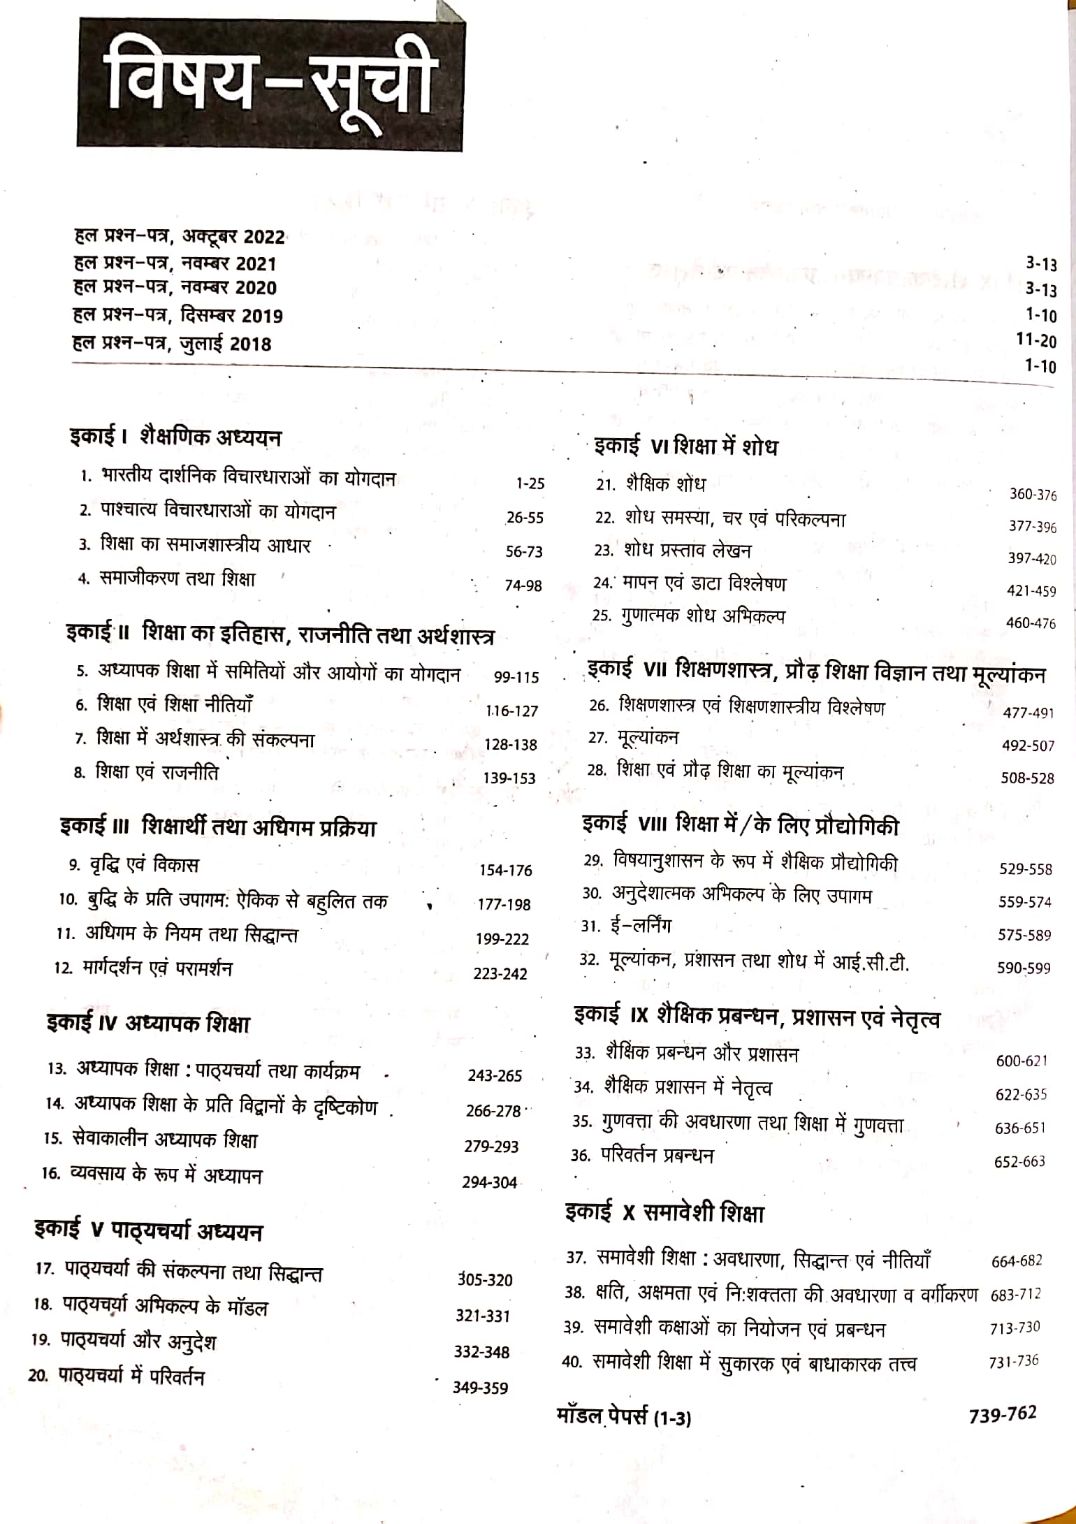 Arihant NTA UGC NET Pedagogy (Shiksha Shastra) Paper-2 By Sanjeet Kumar , Rajesh kumar And Pooja Sharma Latest Edition (Free Shipping)